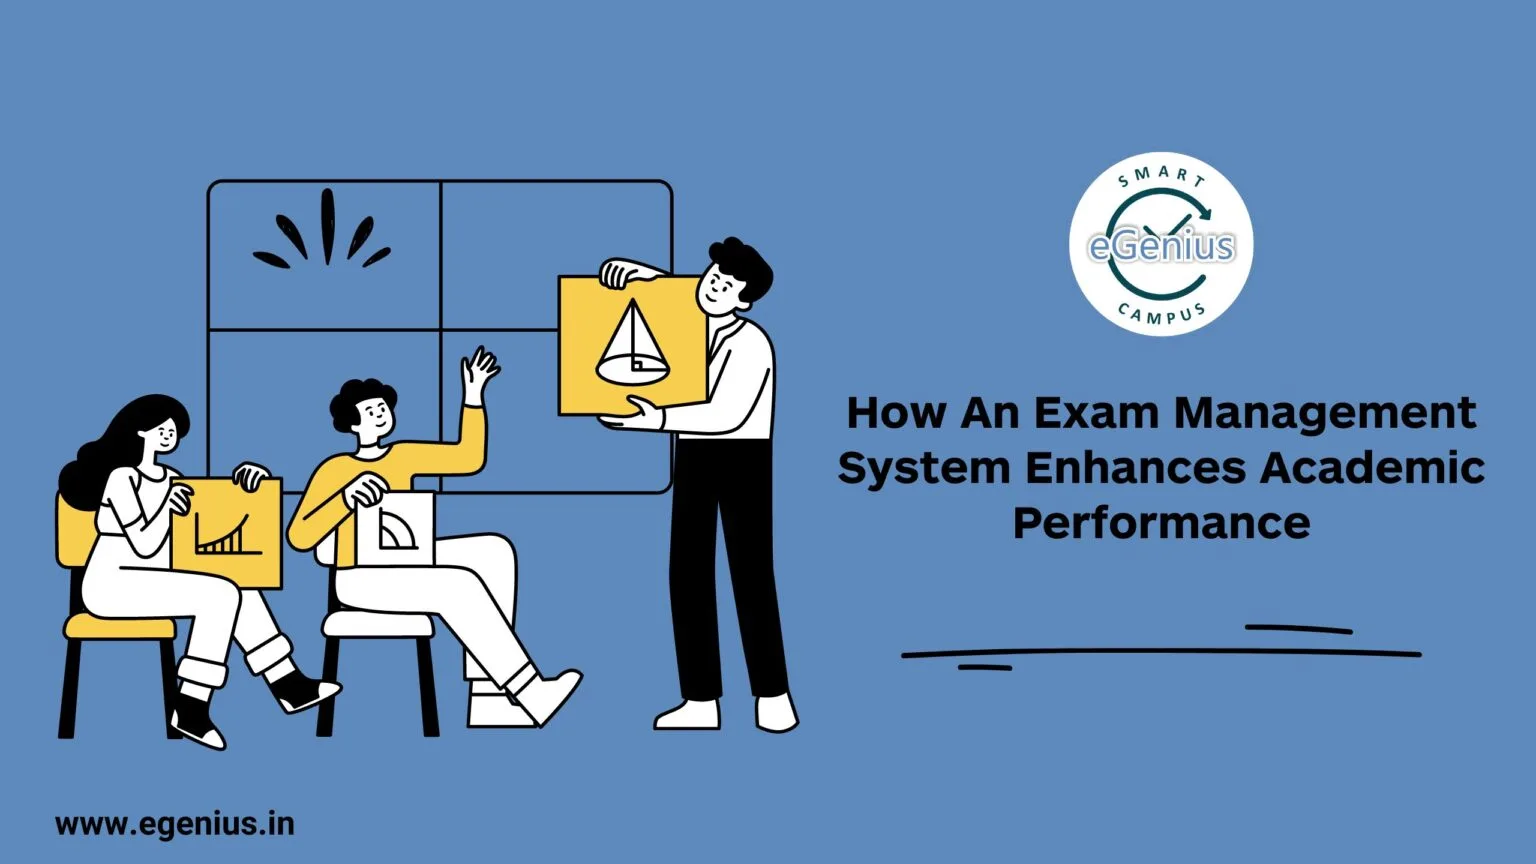 How An Exam Management System Enhances Academic Performance